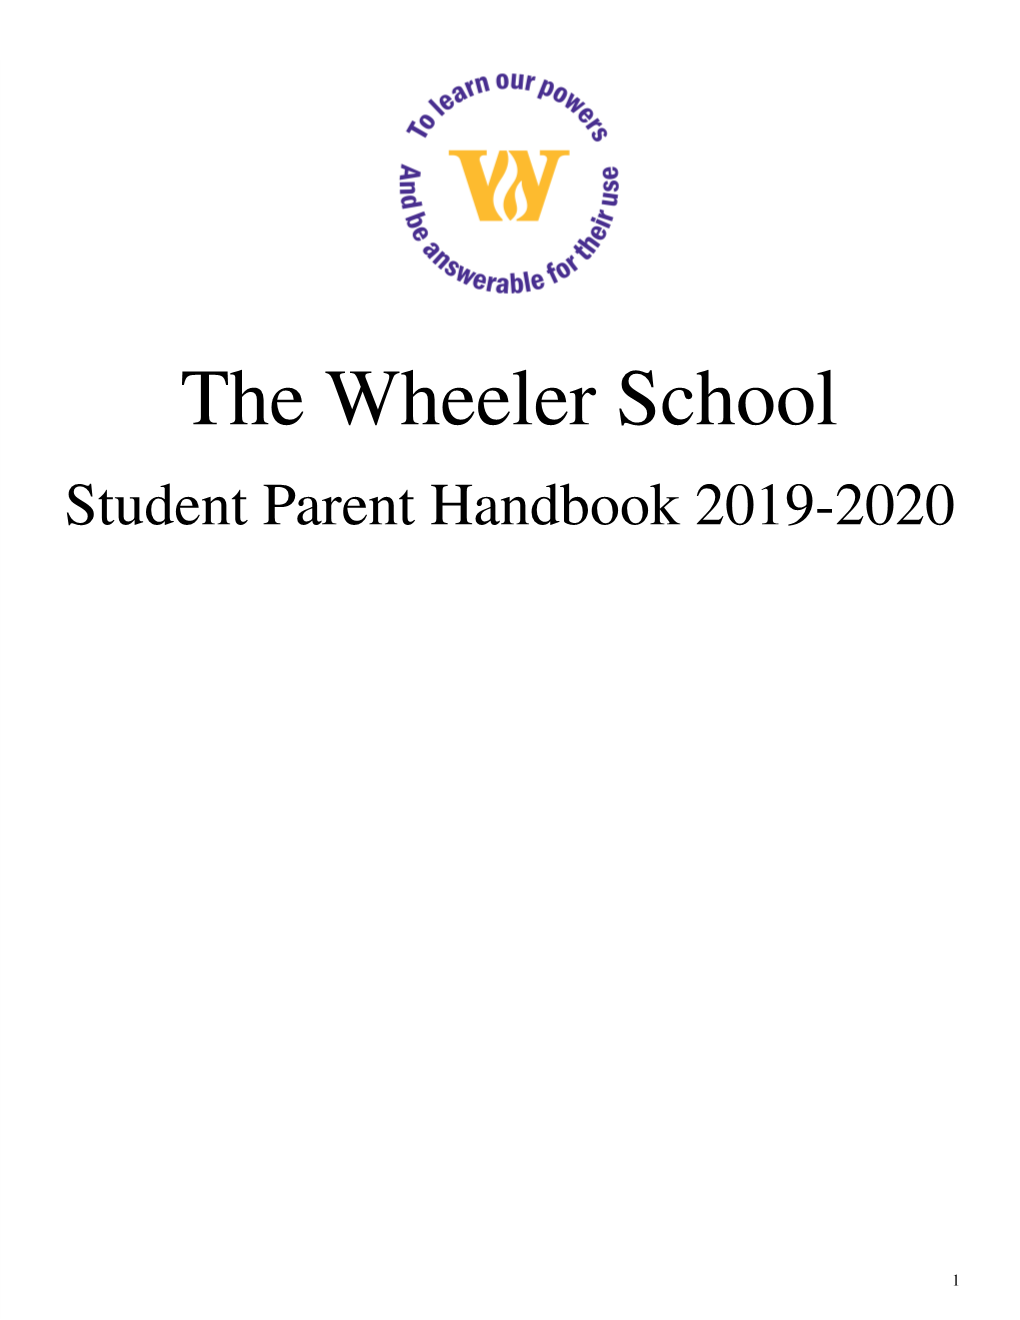 The Wheeler School Student Parent Handbook Disclaimer